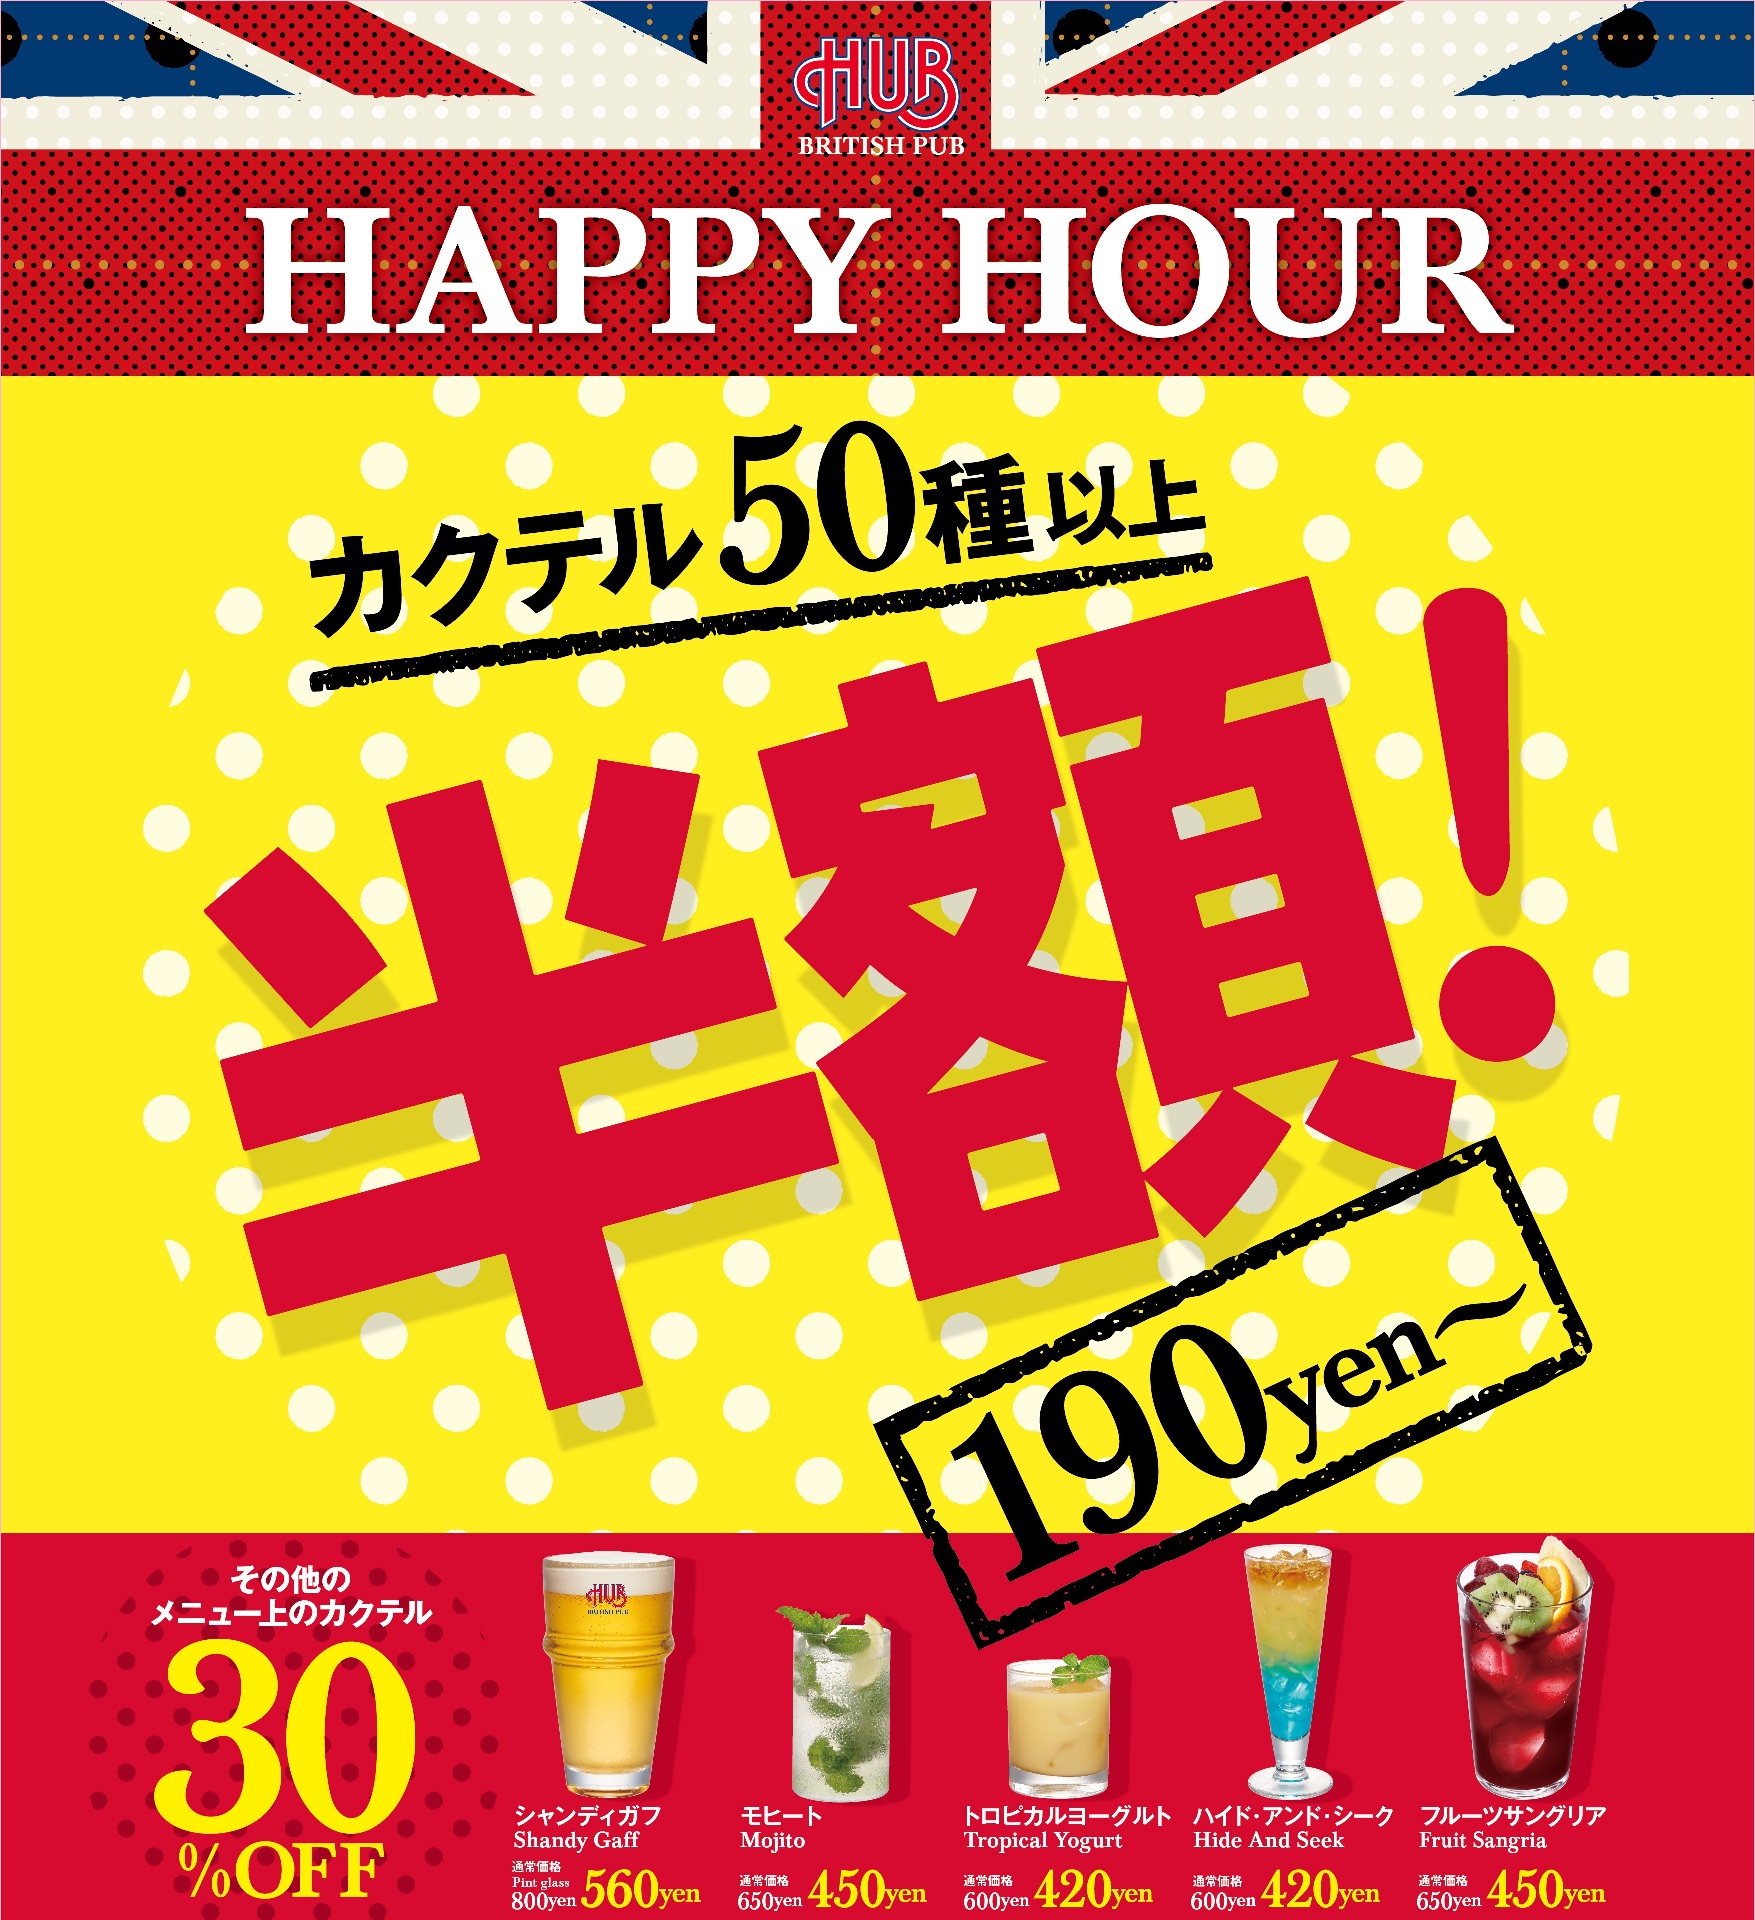 Happy Hourでビールも値引き 10月１日より毎日実施 株式会社ハブのプレスリリース